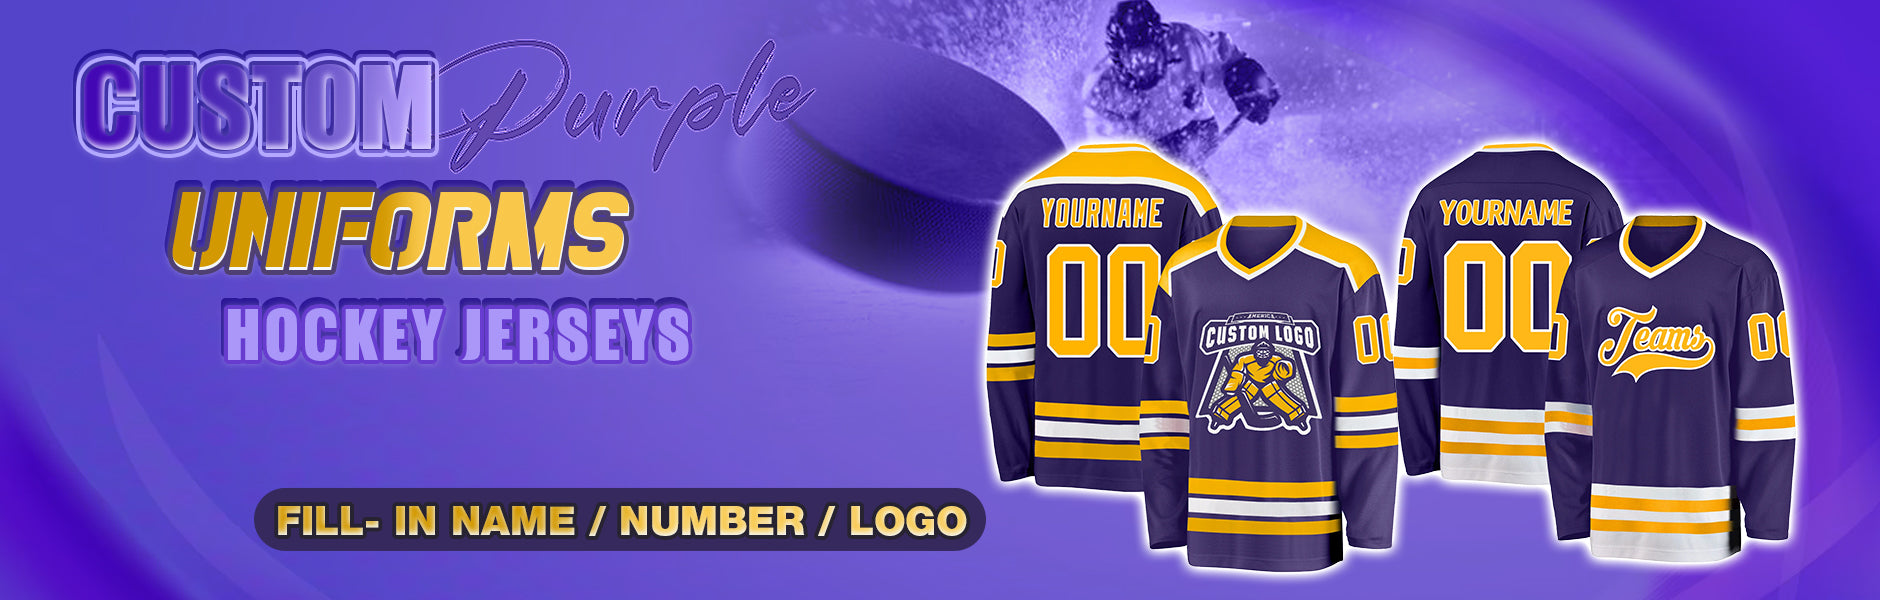 custom hockey purple jersey